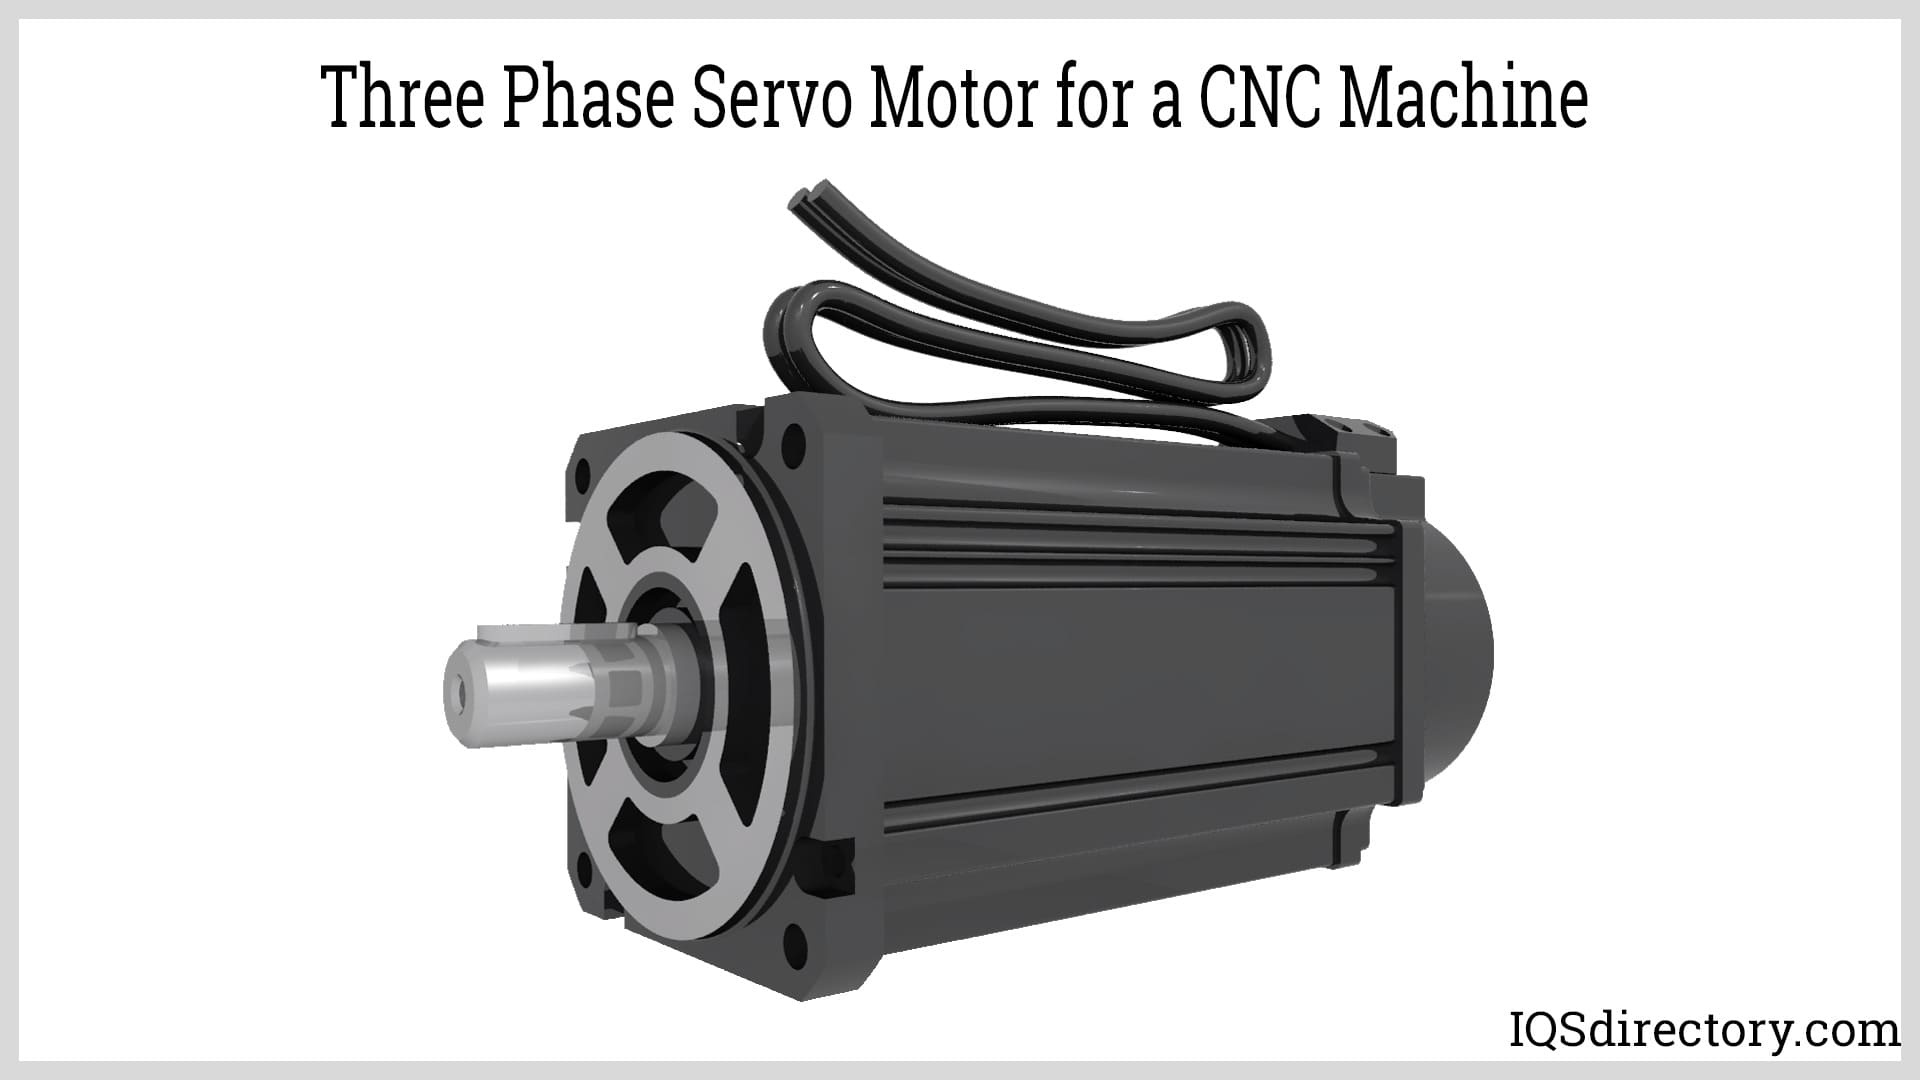 Three Phase Servo Motor for a CNC Machine